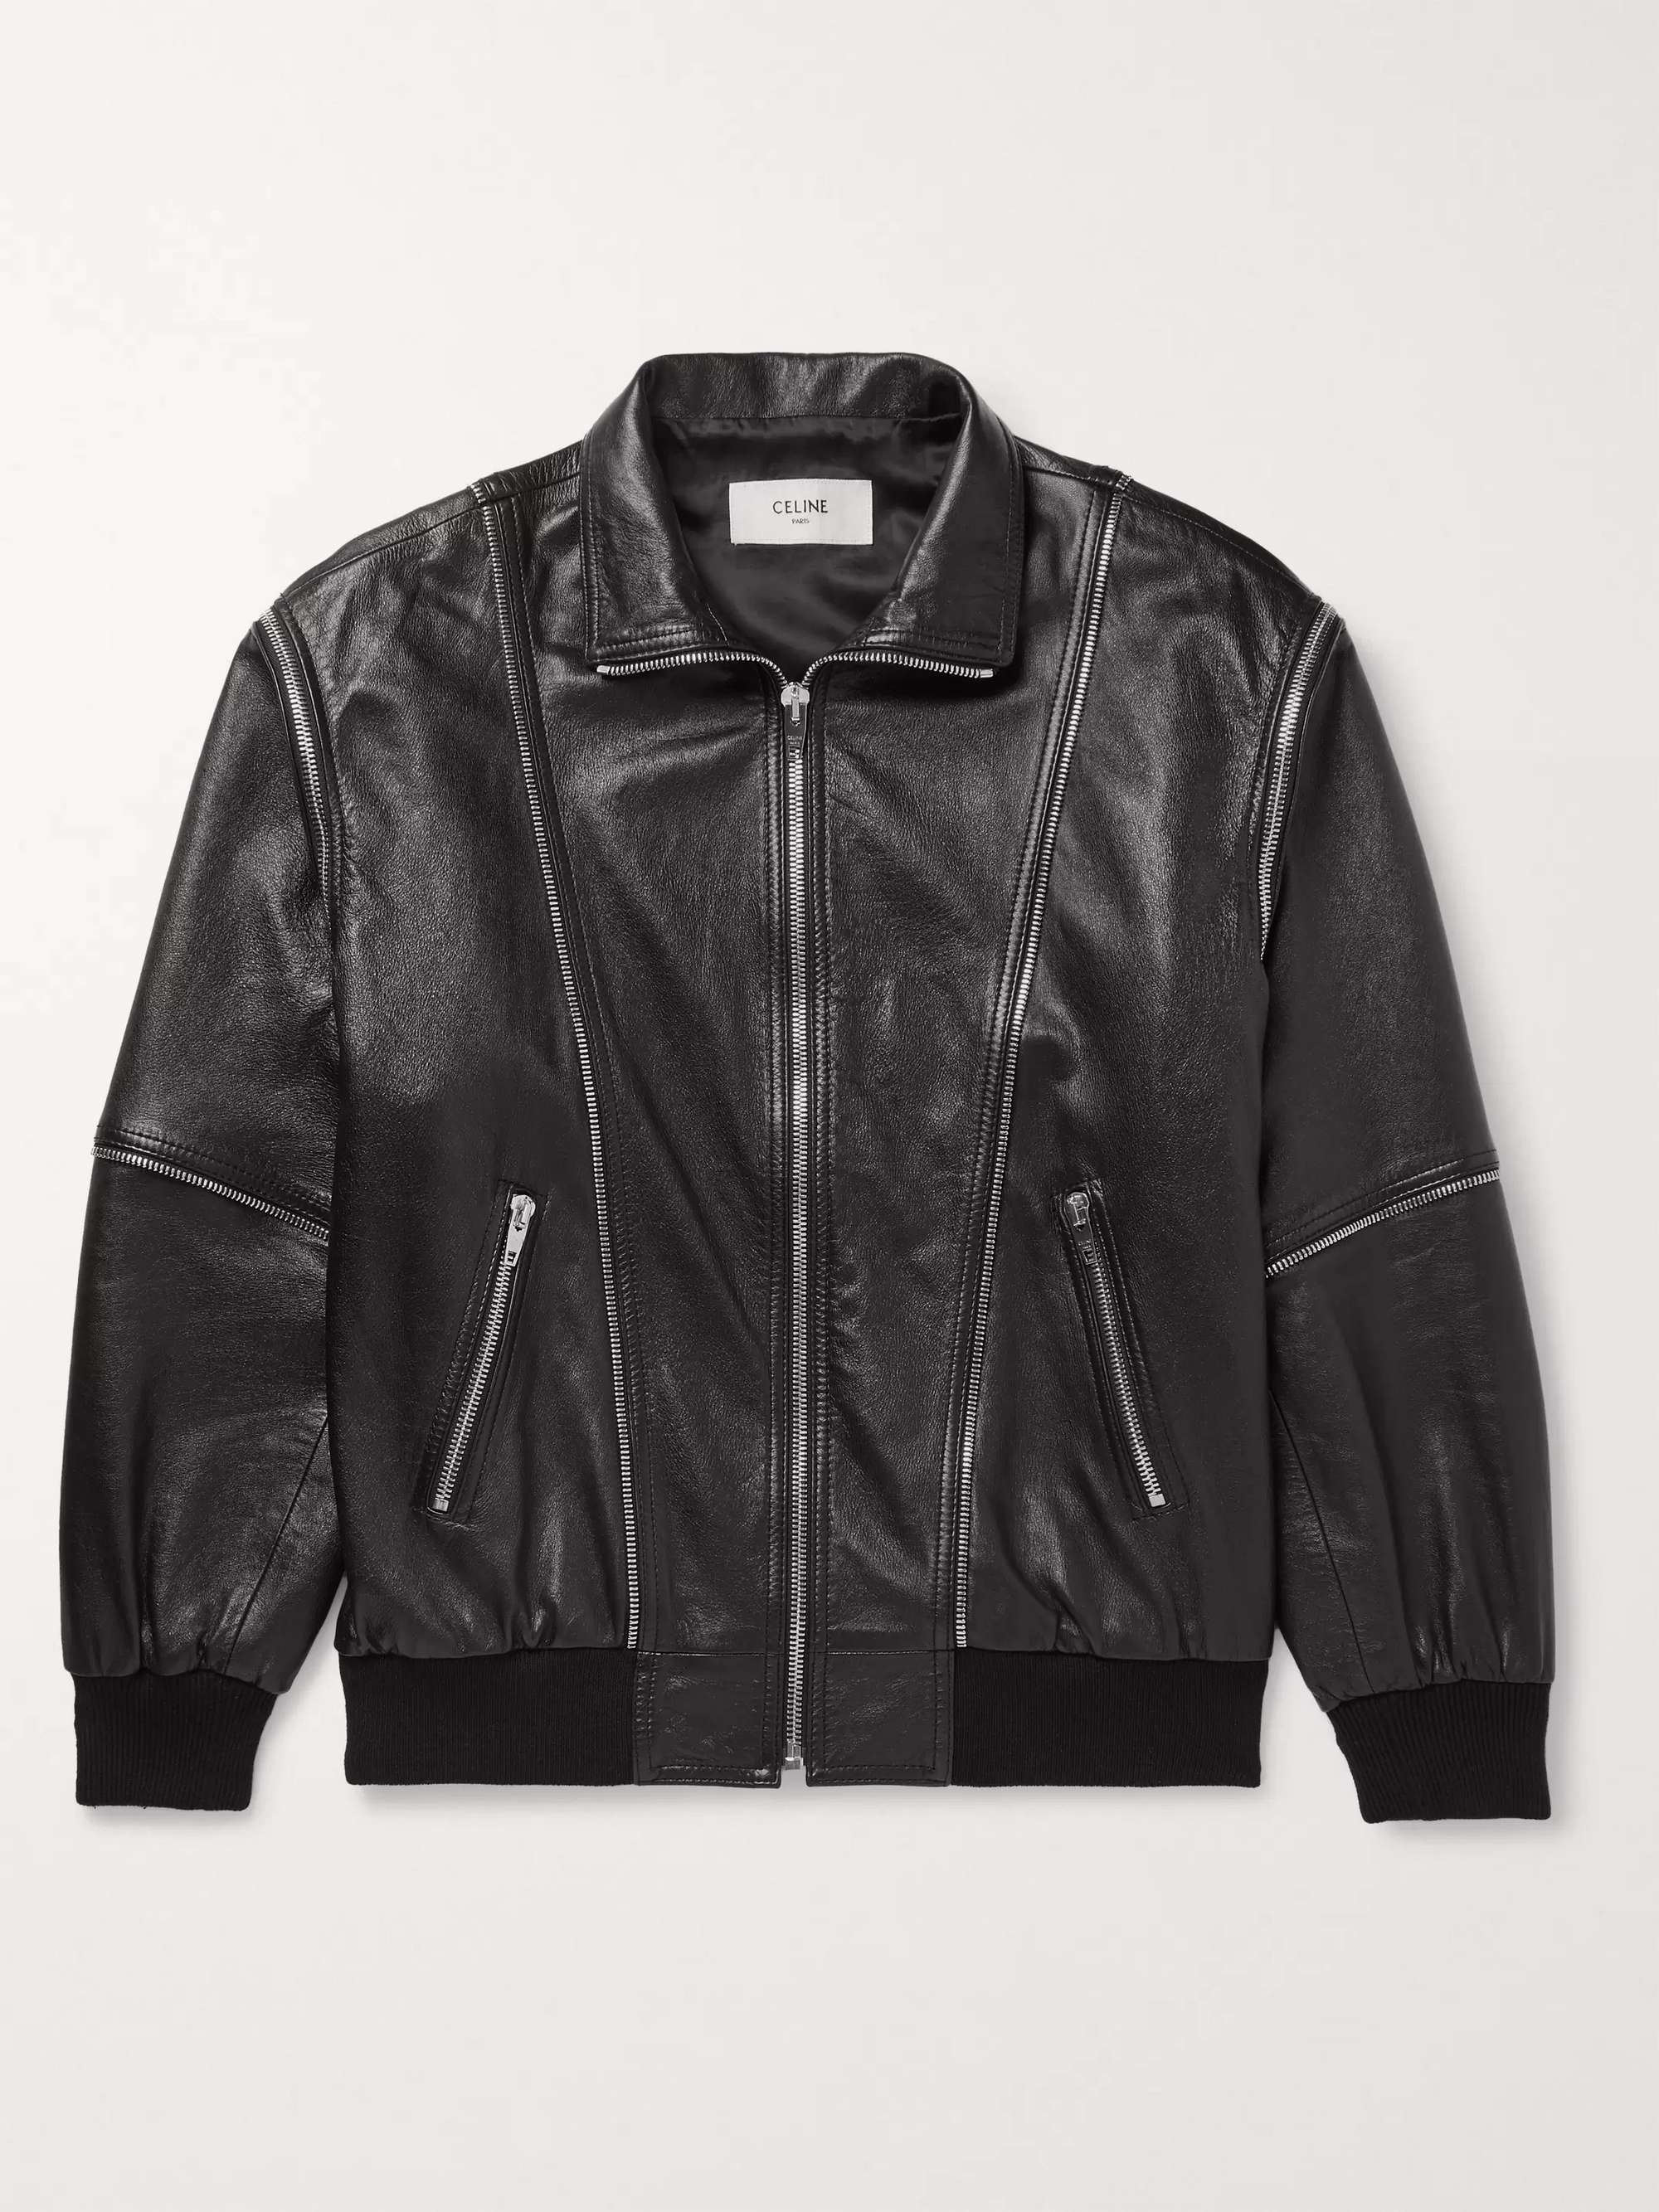 CELINE HOMME Detachable-Sleeve Lambskin Leather Jacket for Men | MR PORTER